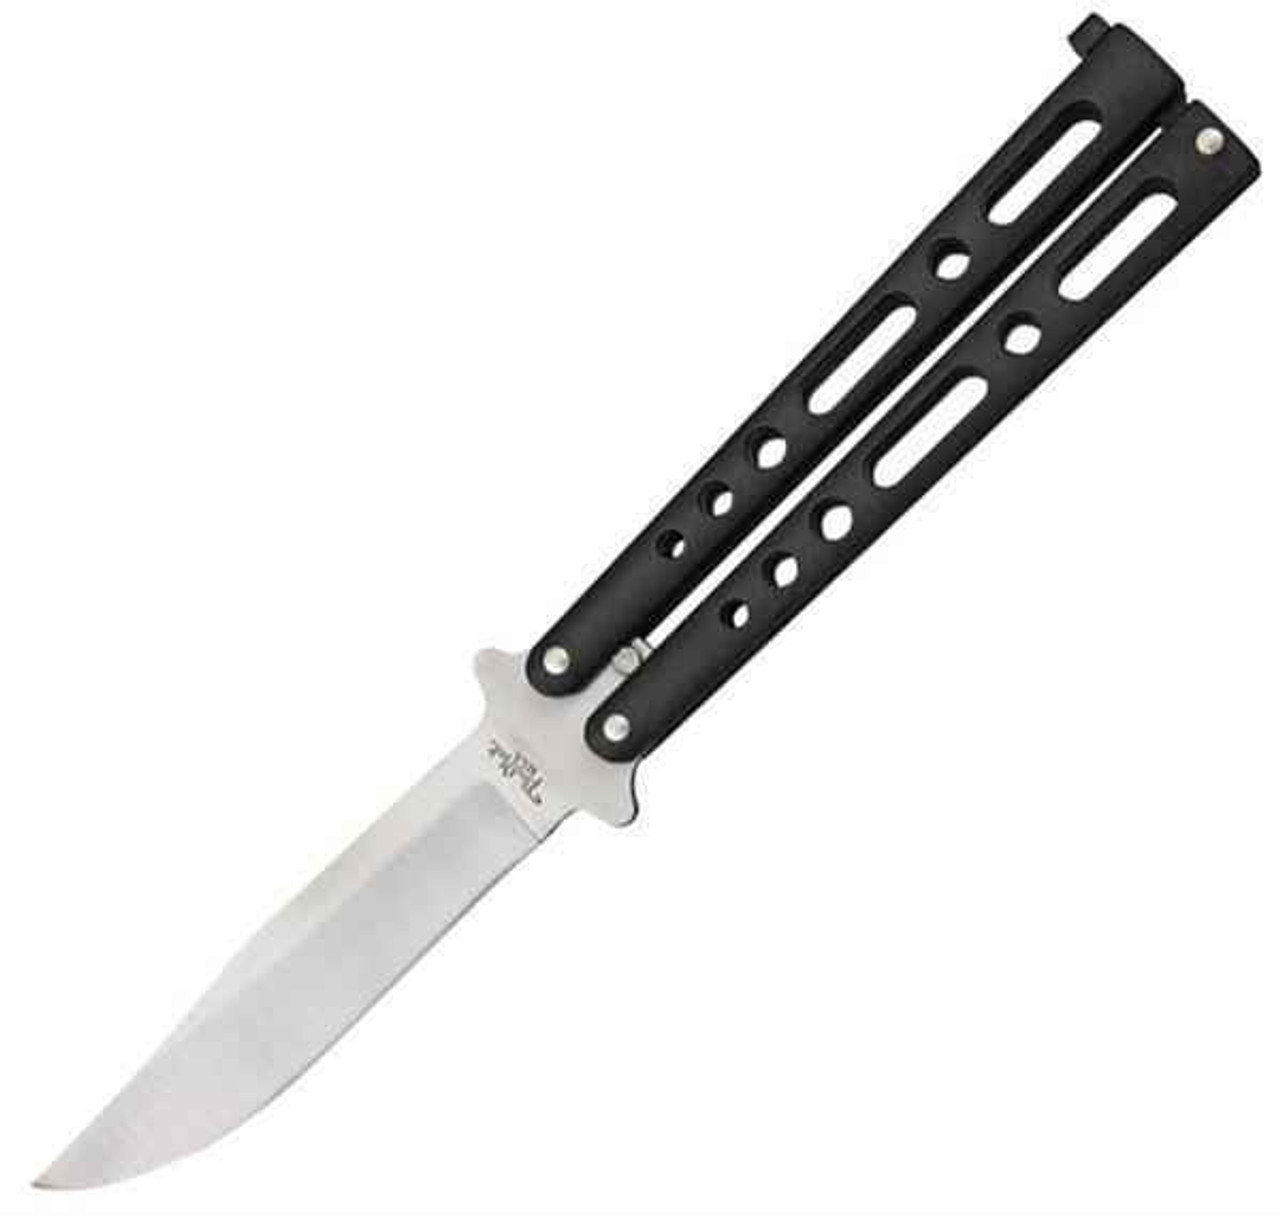 Benchmark Balisong Knife - Black (4" Stainless Steel)